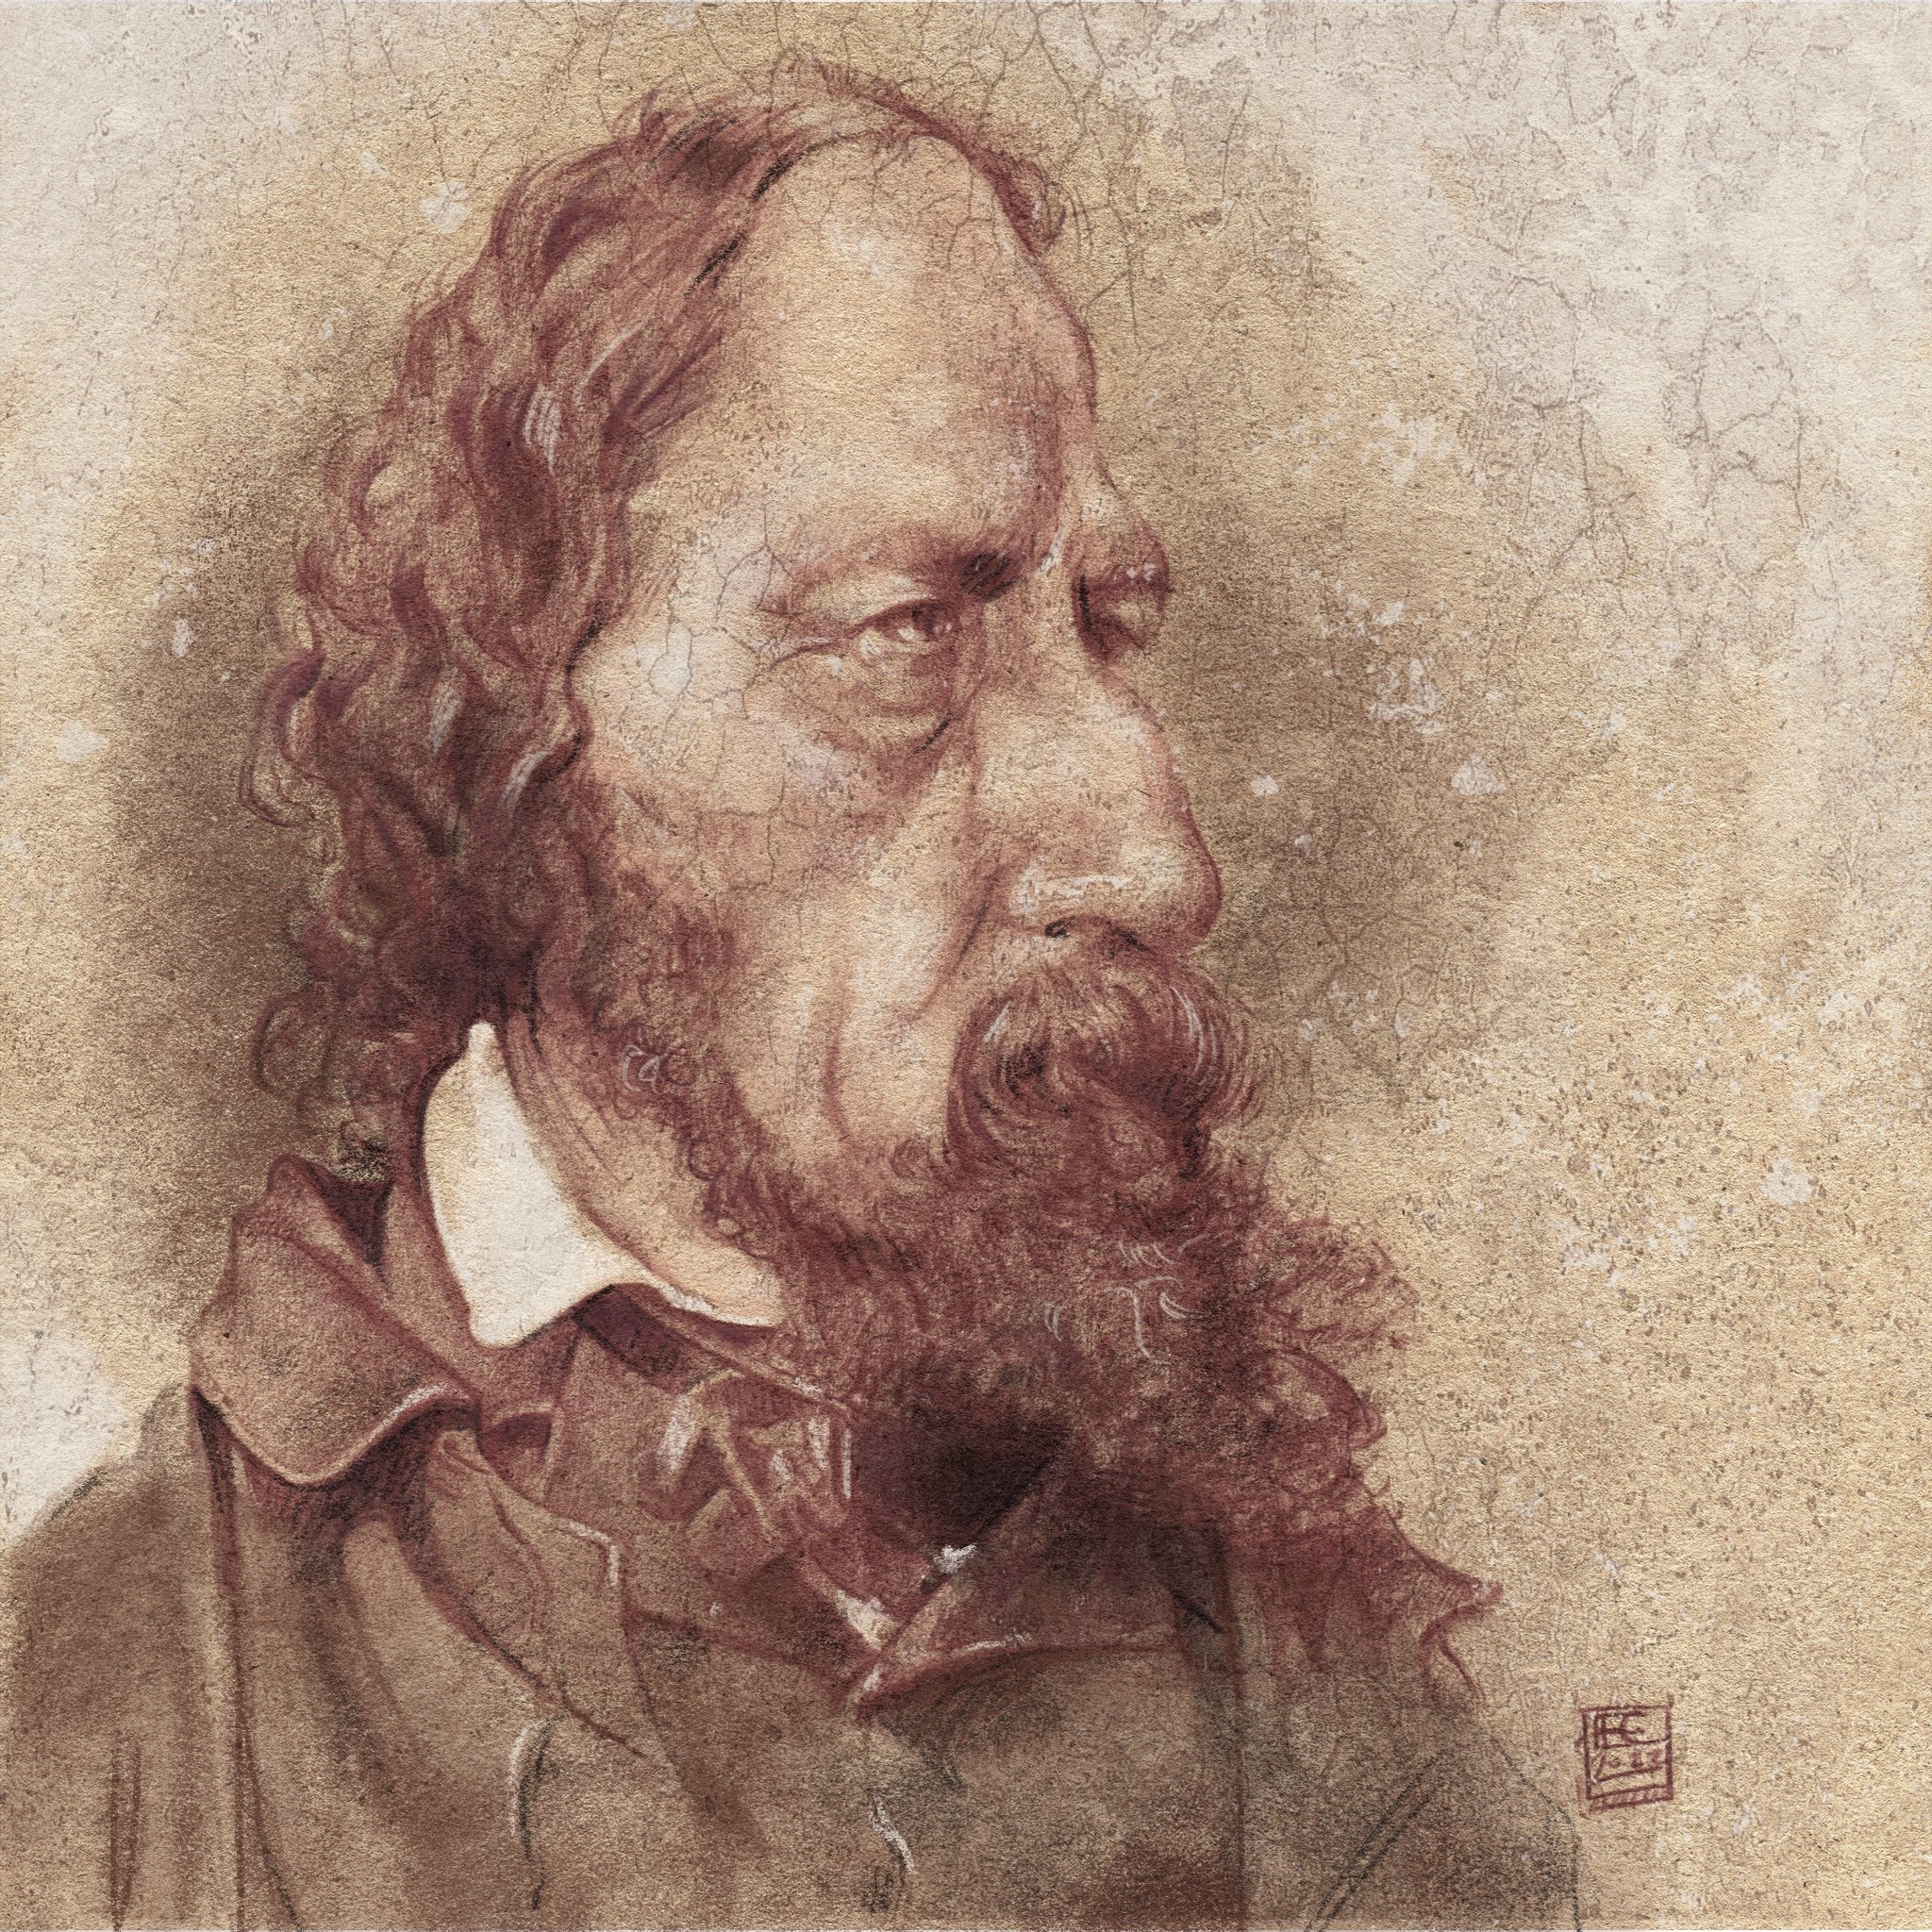 Alfred Tennyson - August 6, 1809